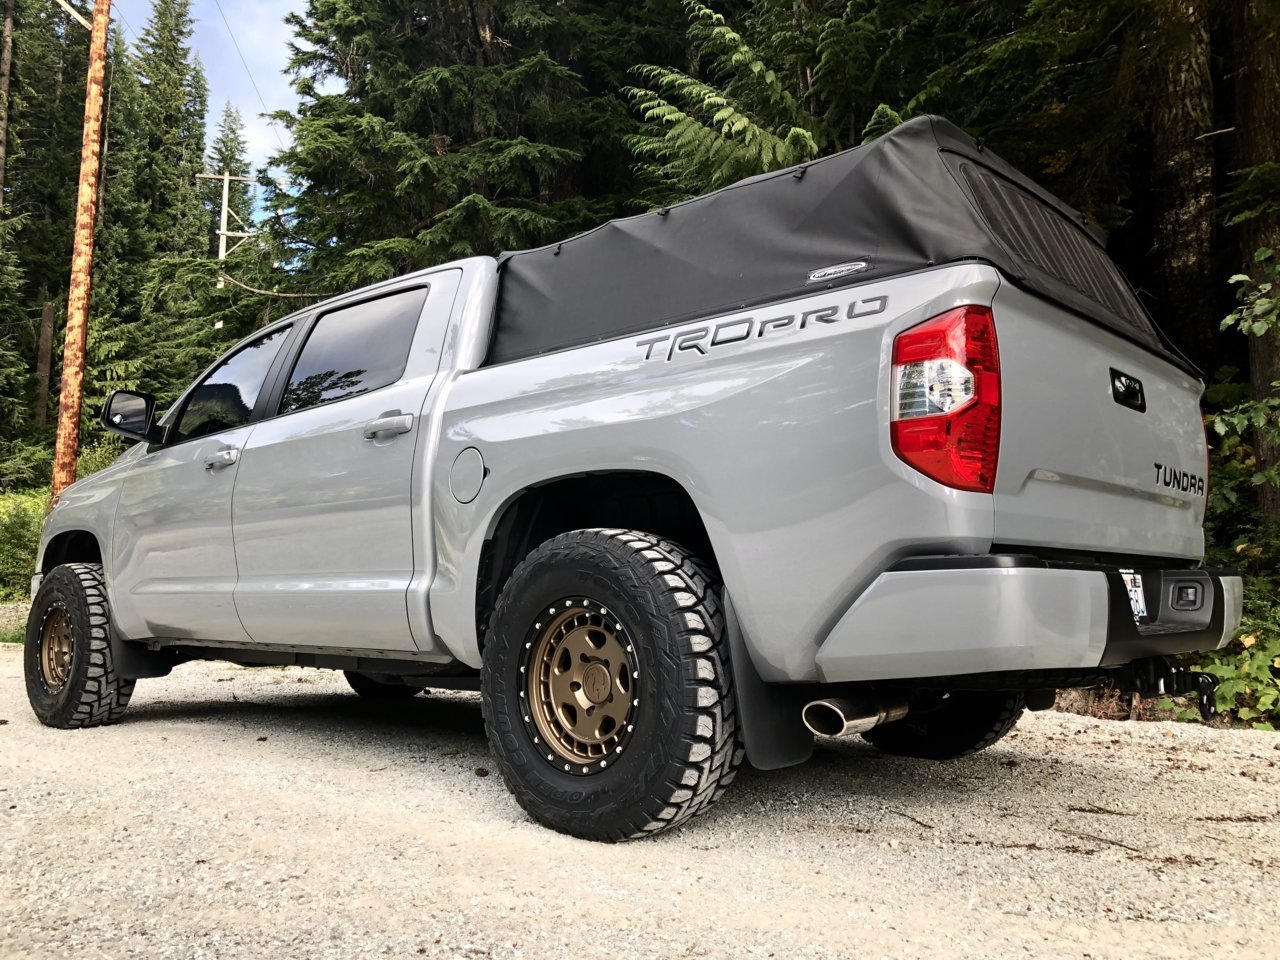 New fifteen52 wheels installed Toyota Tundra Forum